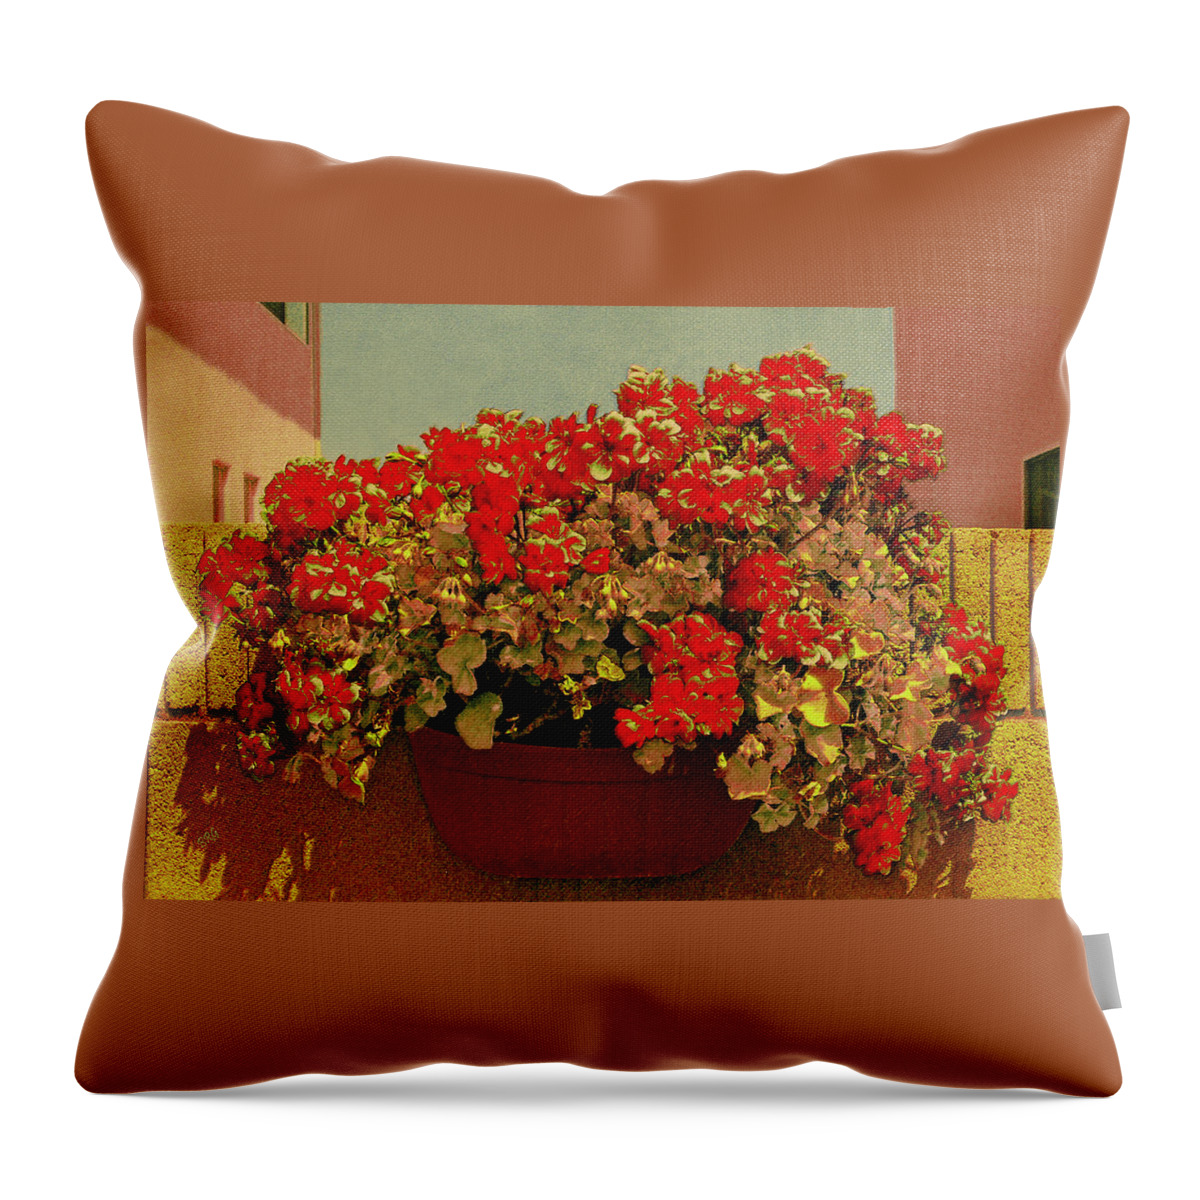 Floral Still Life Throw Pillow featuring the photograph Hanging Pot With Geranium by Ben and Raisa Gertsberg